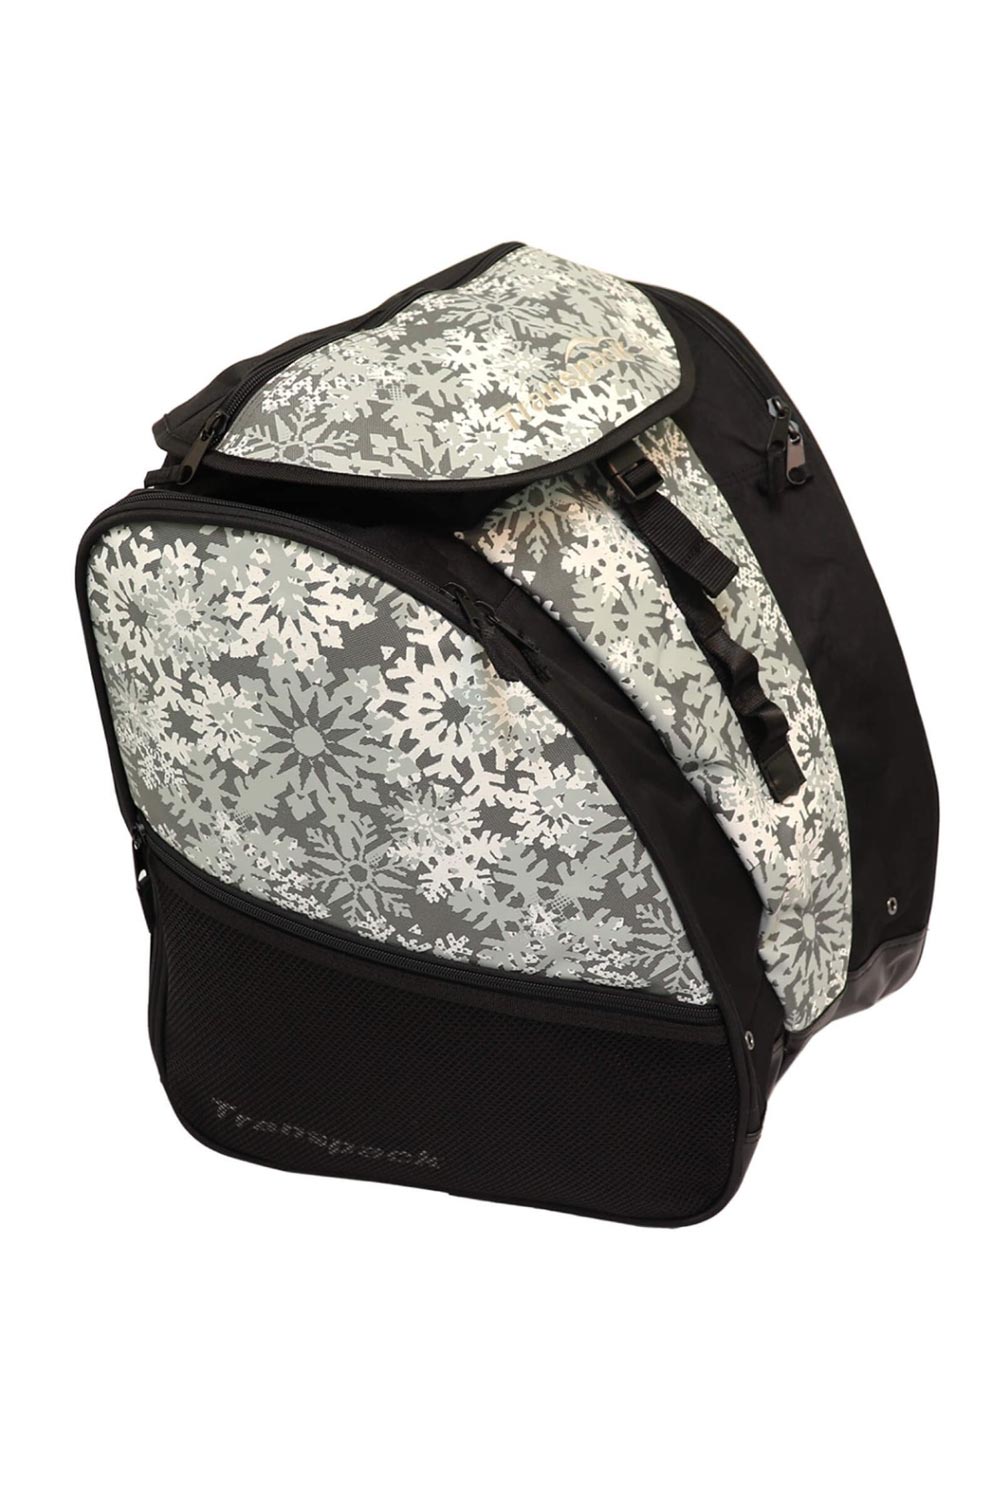 ski boot & gear backpack bag, white snowflake pattern